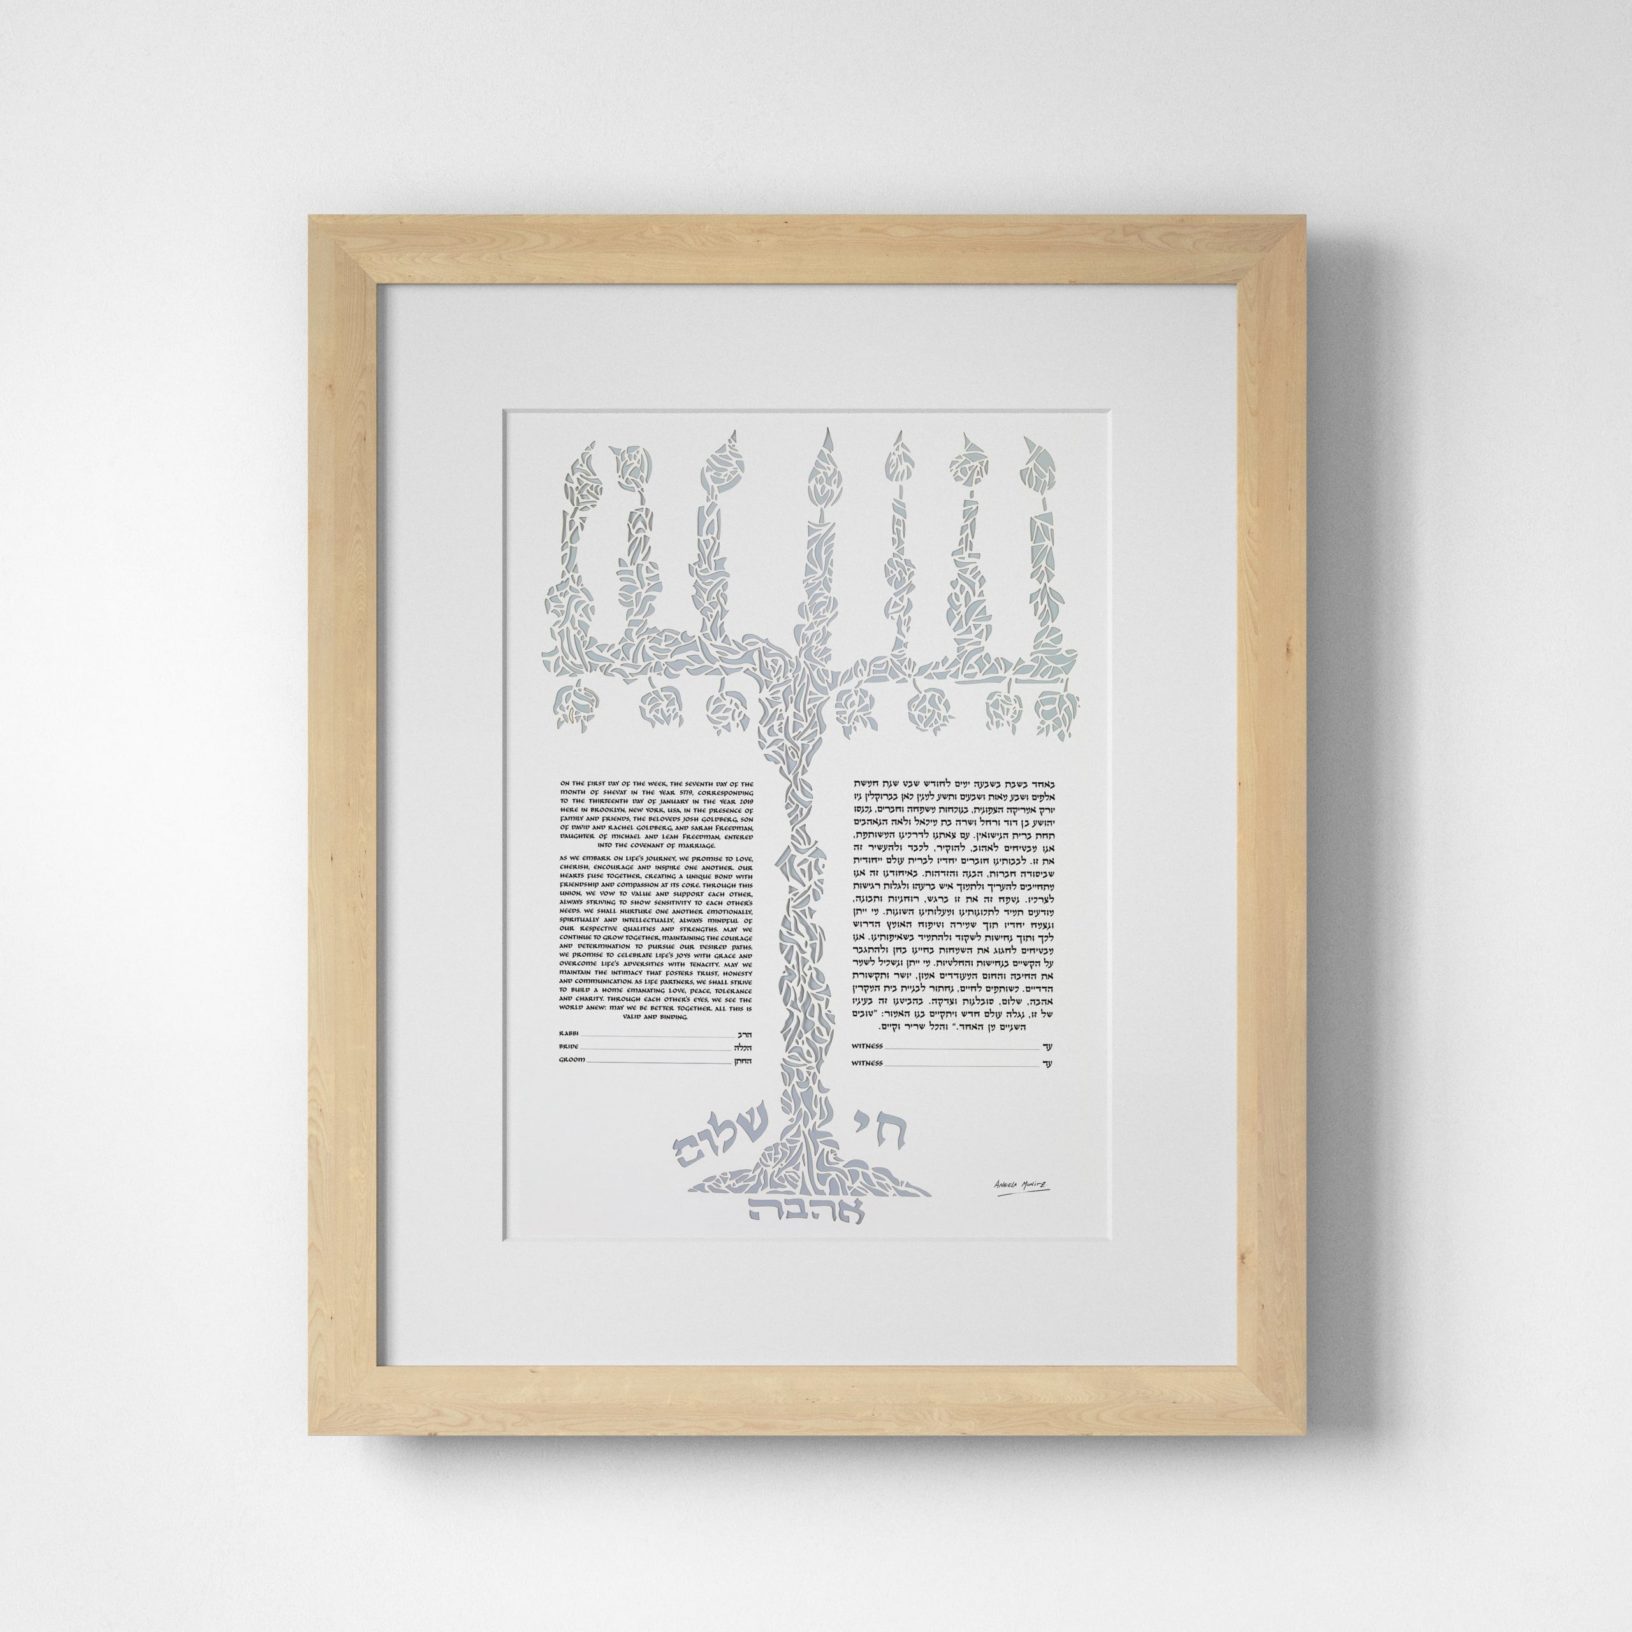 My Beshert - Love, Light & Menorah Papercut Ketubah Jewish Marriage Contracts by Angela Munitz